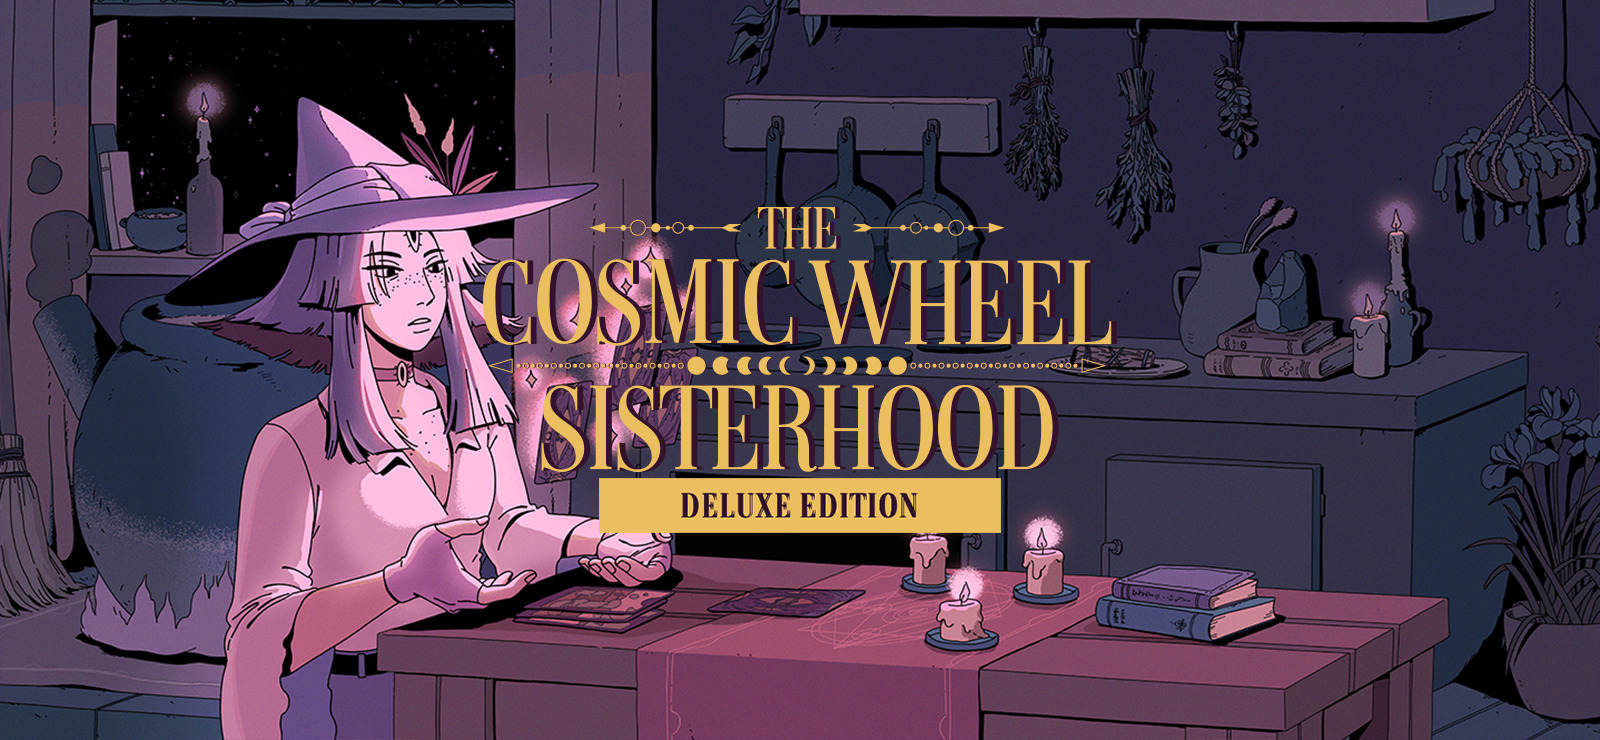 10% The Cosmic Wheel Sisterhood - Deluxe Edition on GOG.com